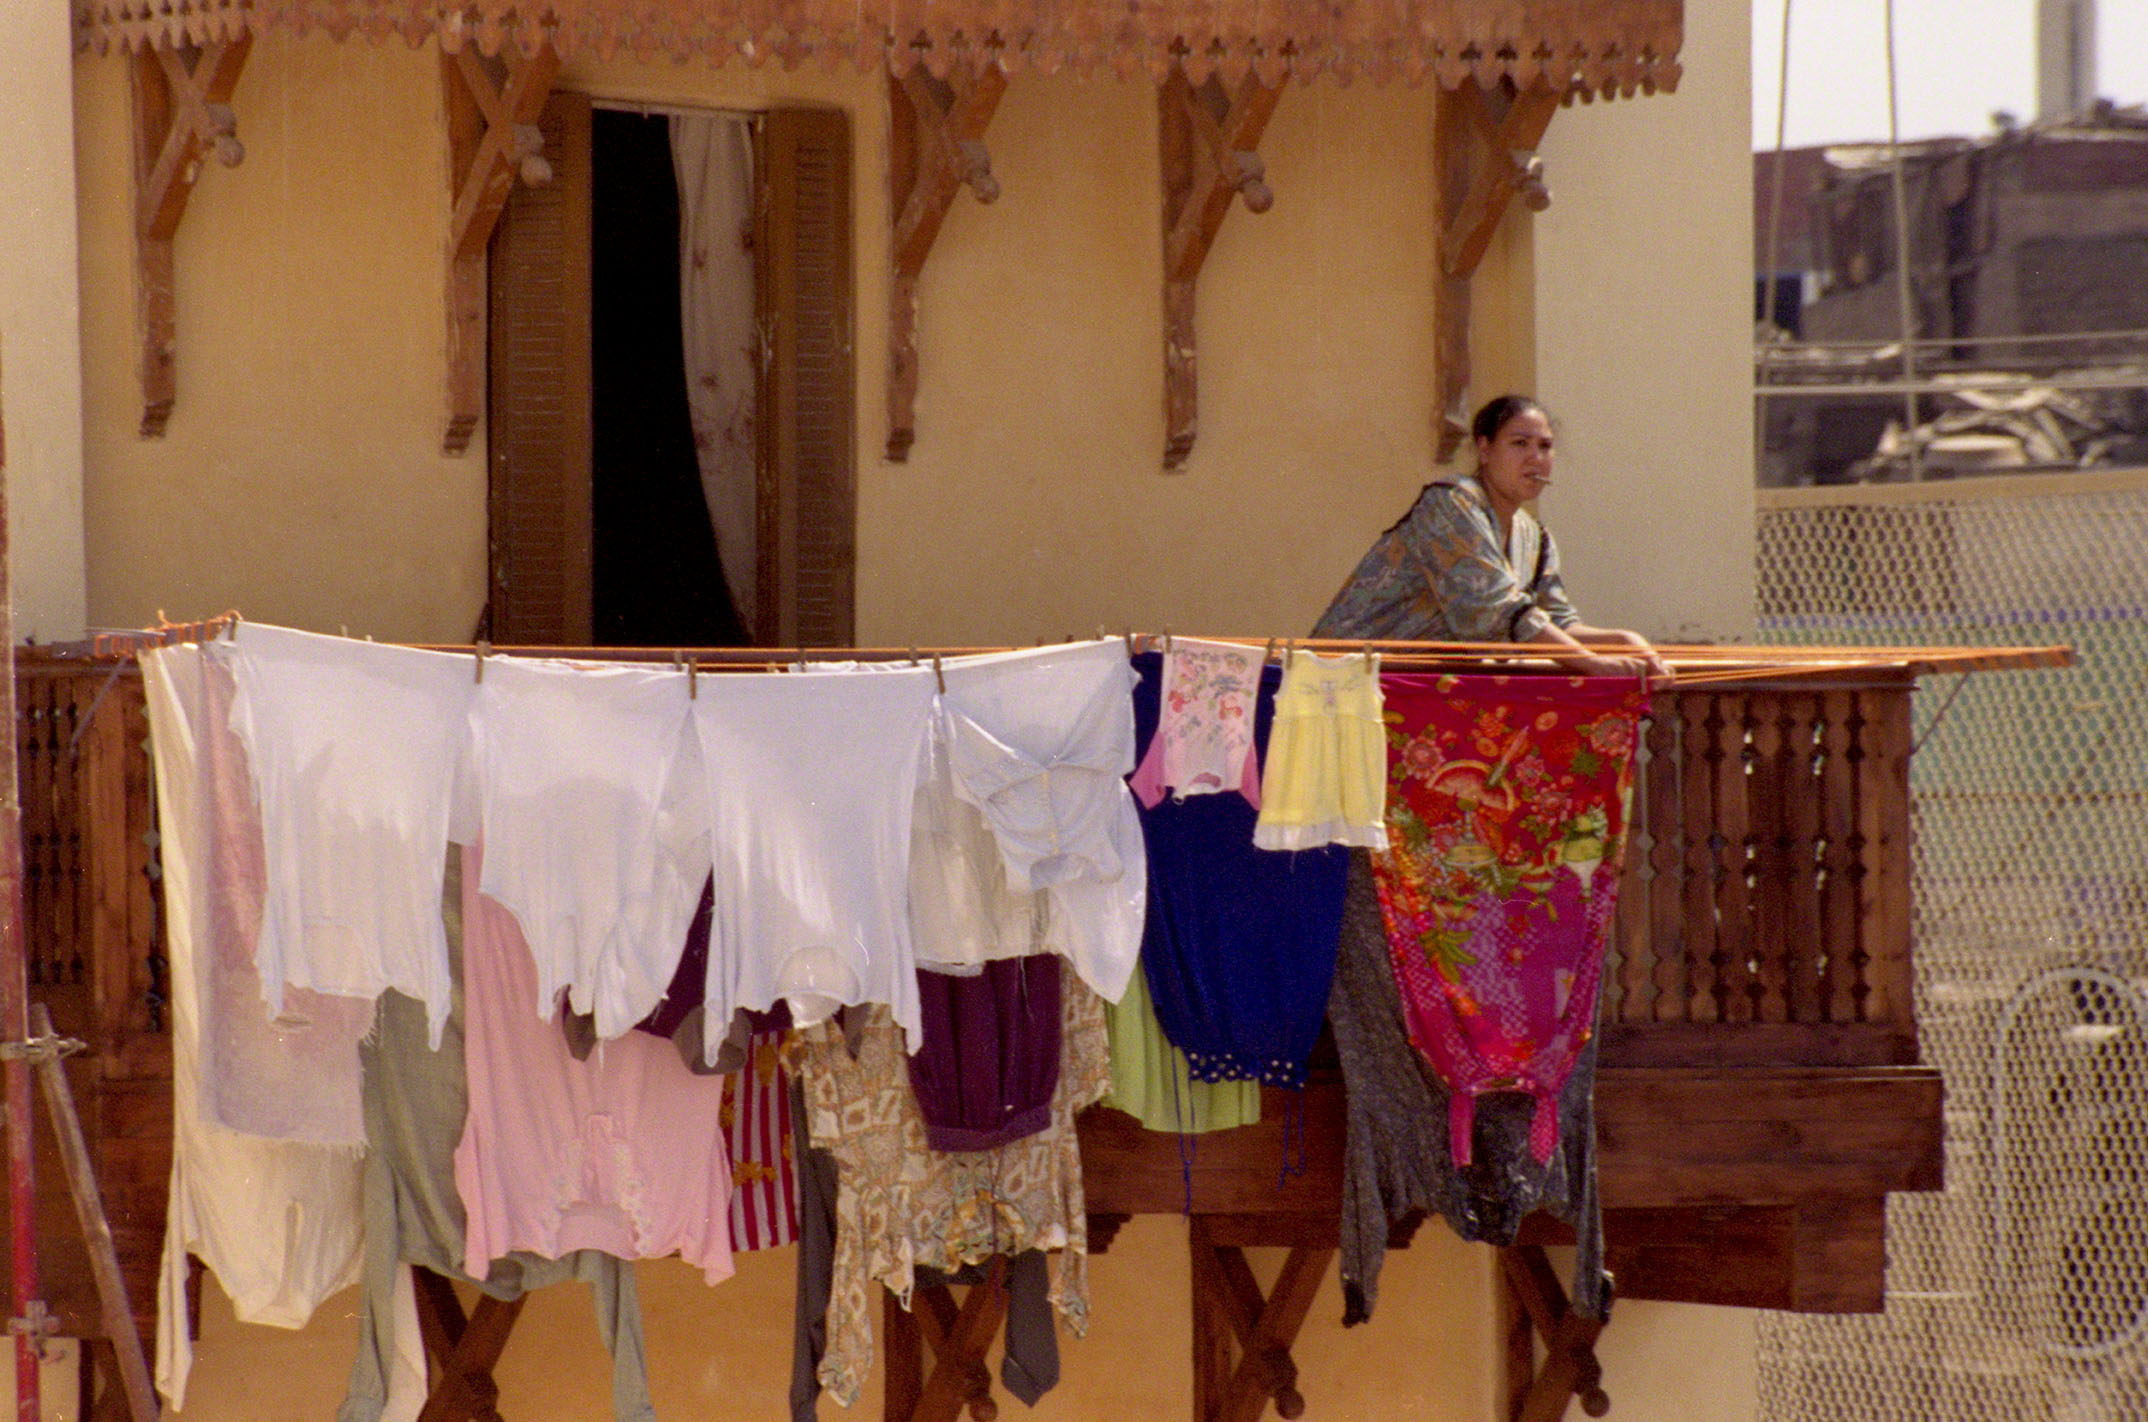 Hanging Laundry, Cairo, Egypt